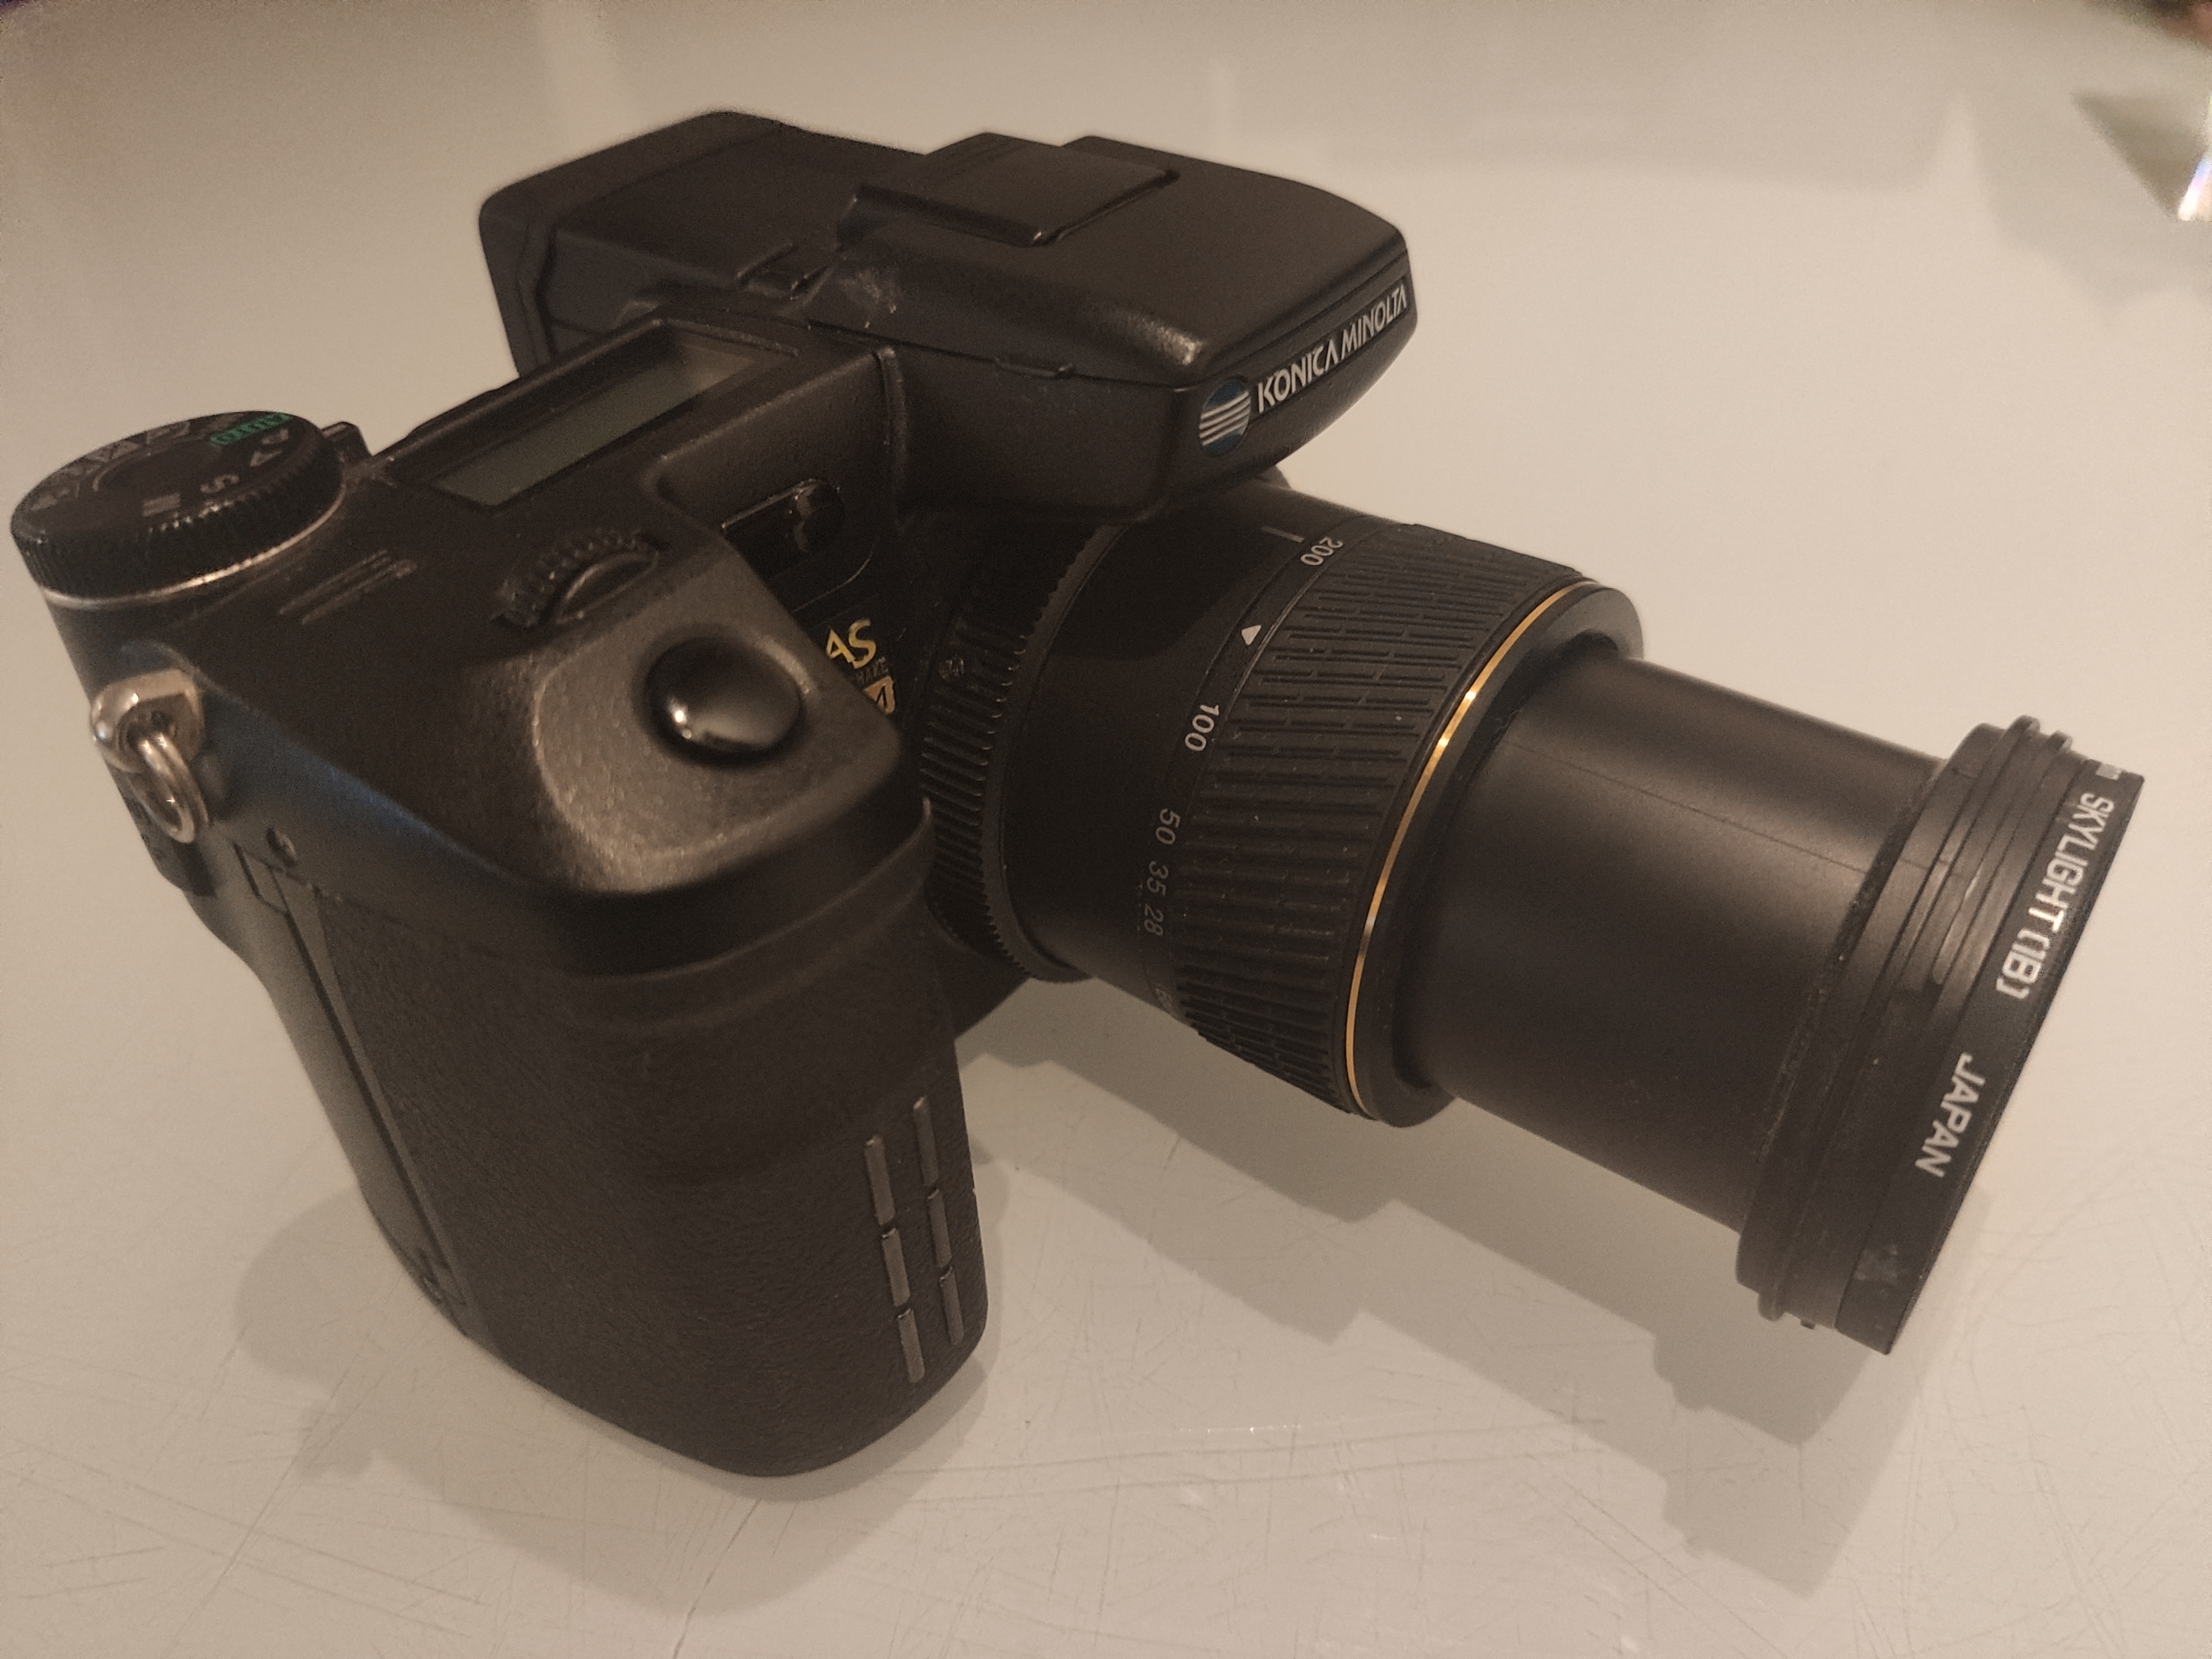 A Konica Minolta Dimage A2 Digital Camera Kit. 2 X Batteries, Wide Lens Converter and More. - Image 7 of 7